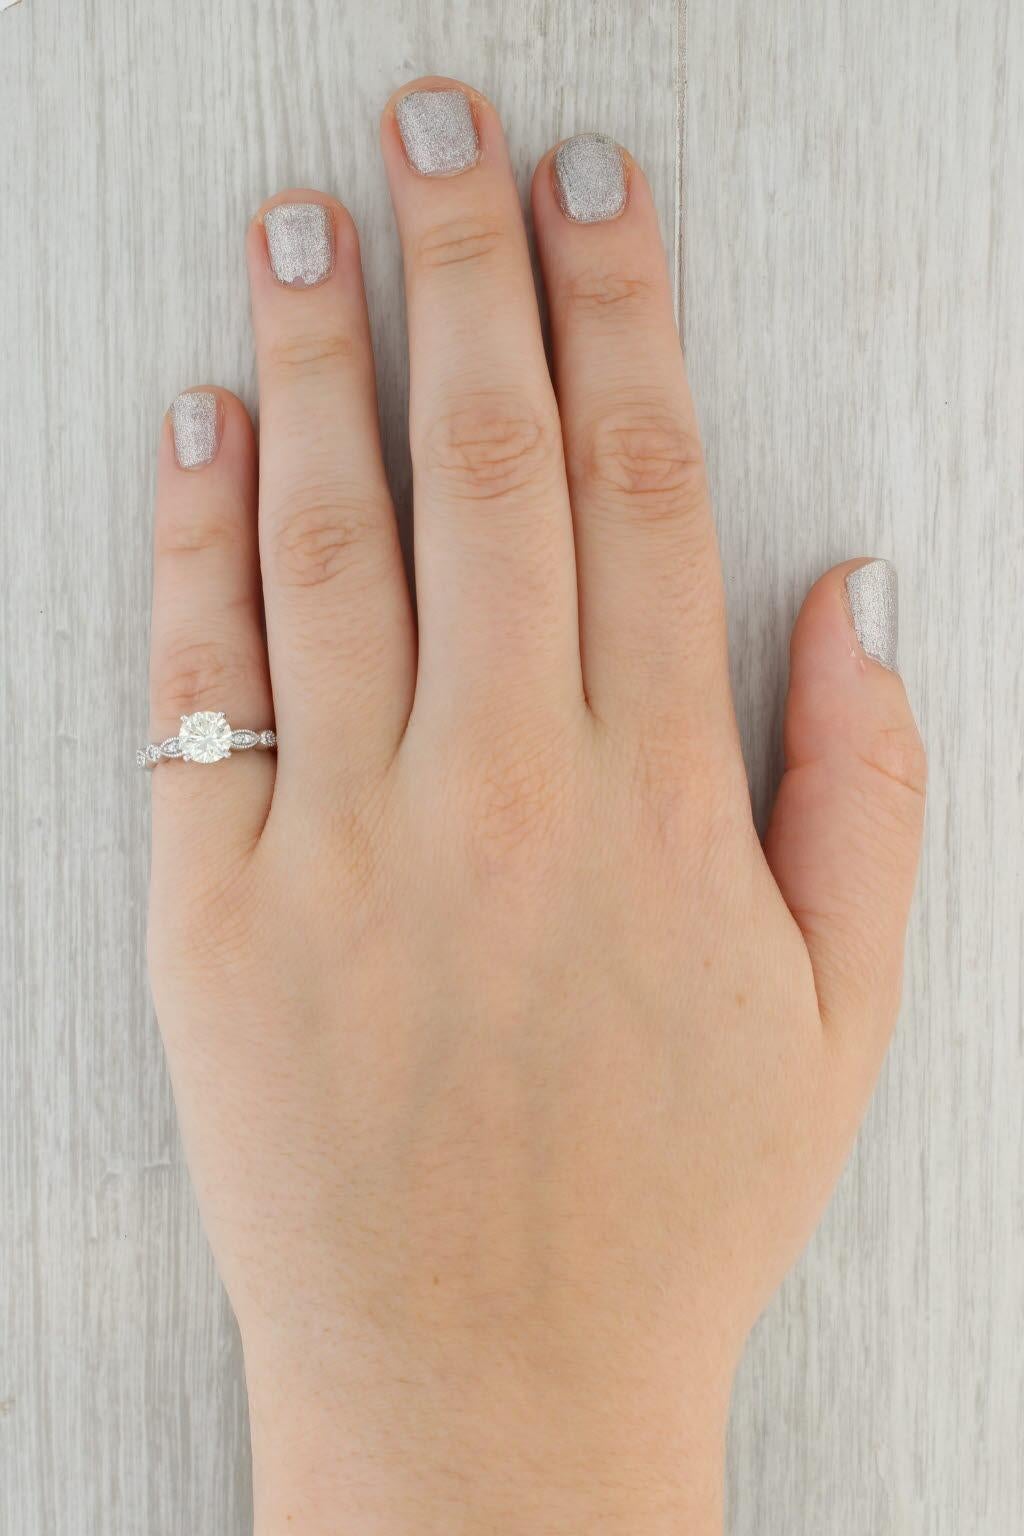 1.25ctw VS1 Round Diamond Engagement Ring 14k White Gold Size 5.25 GIA For Sale 5